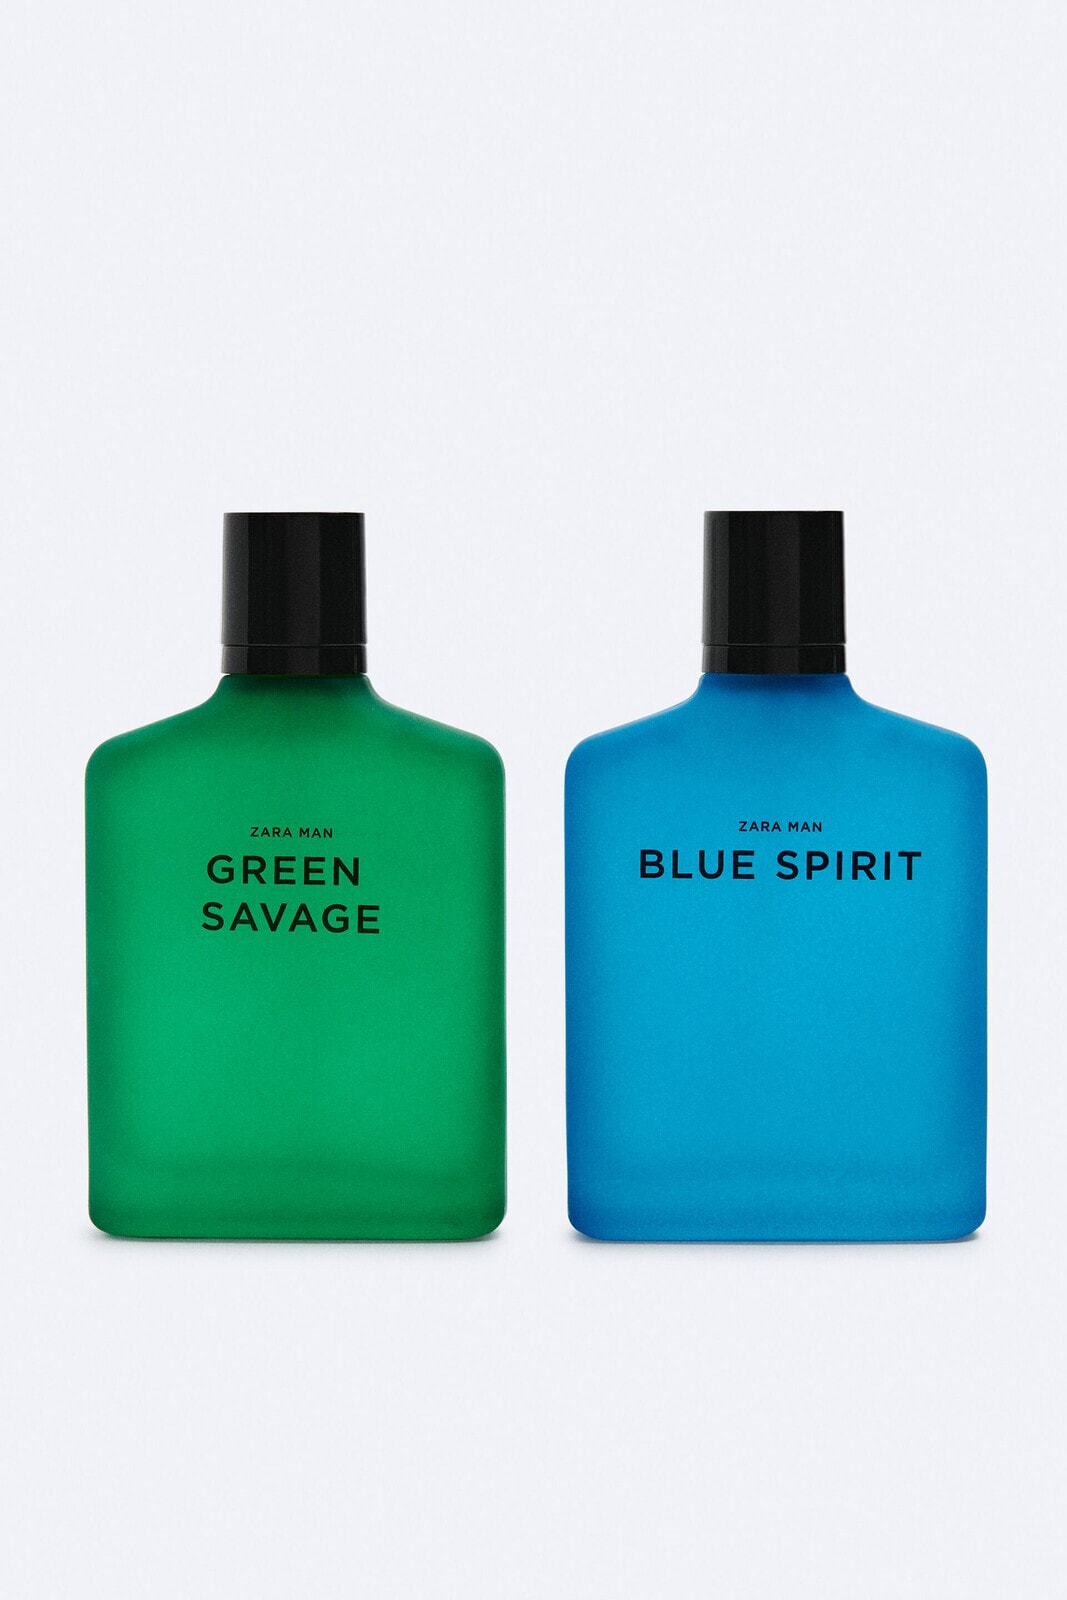 Green savage + blue spirit 100 ml / 3.38 oz